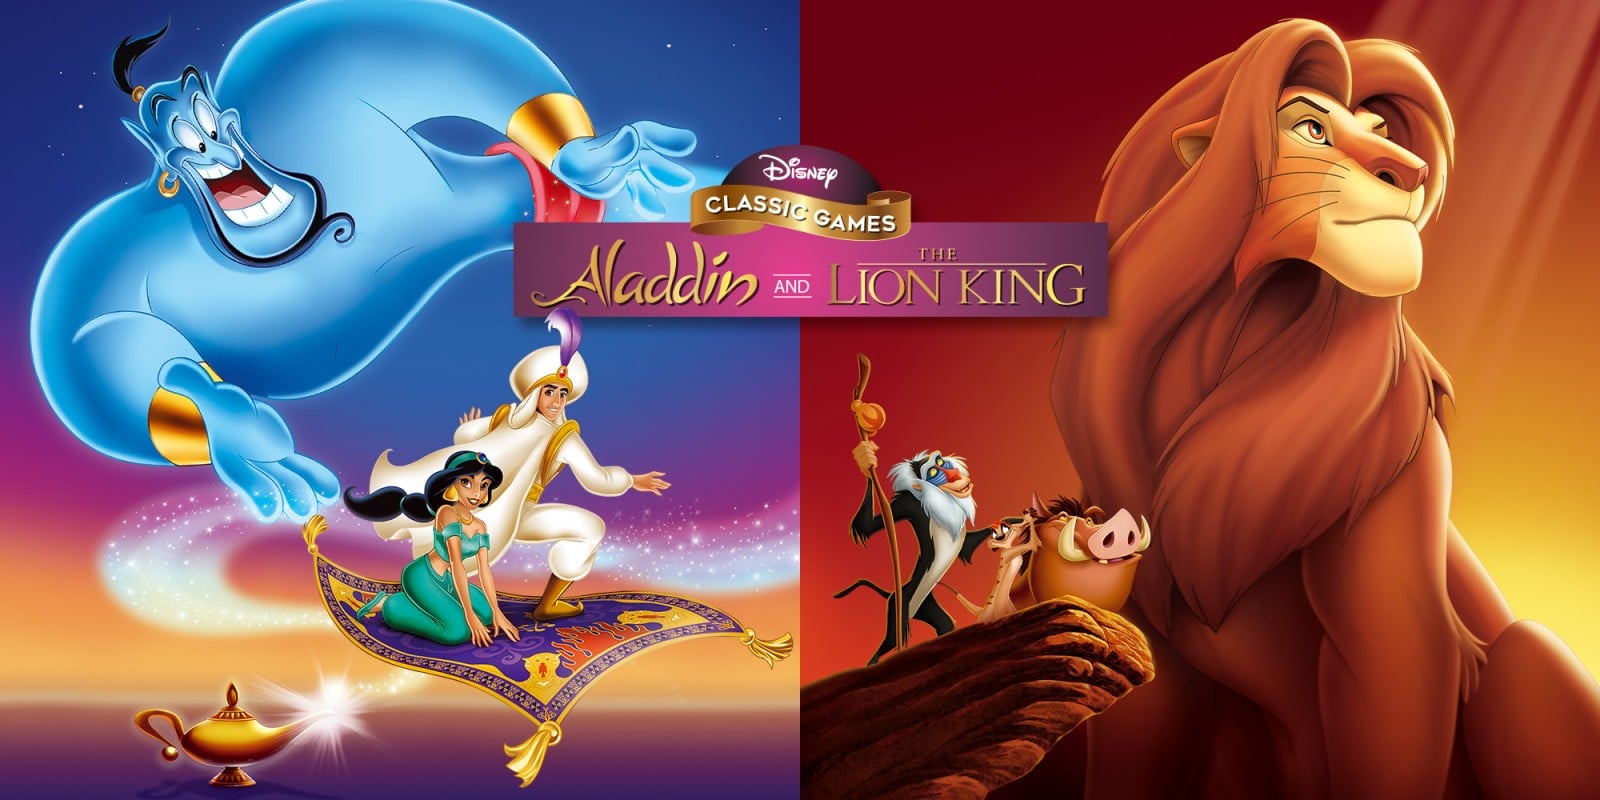 Disney Classic Games: Aladdin & The Lion King – DLC – The Jungle Book & More Aladdin Pack